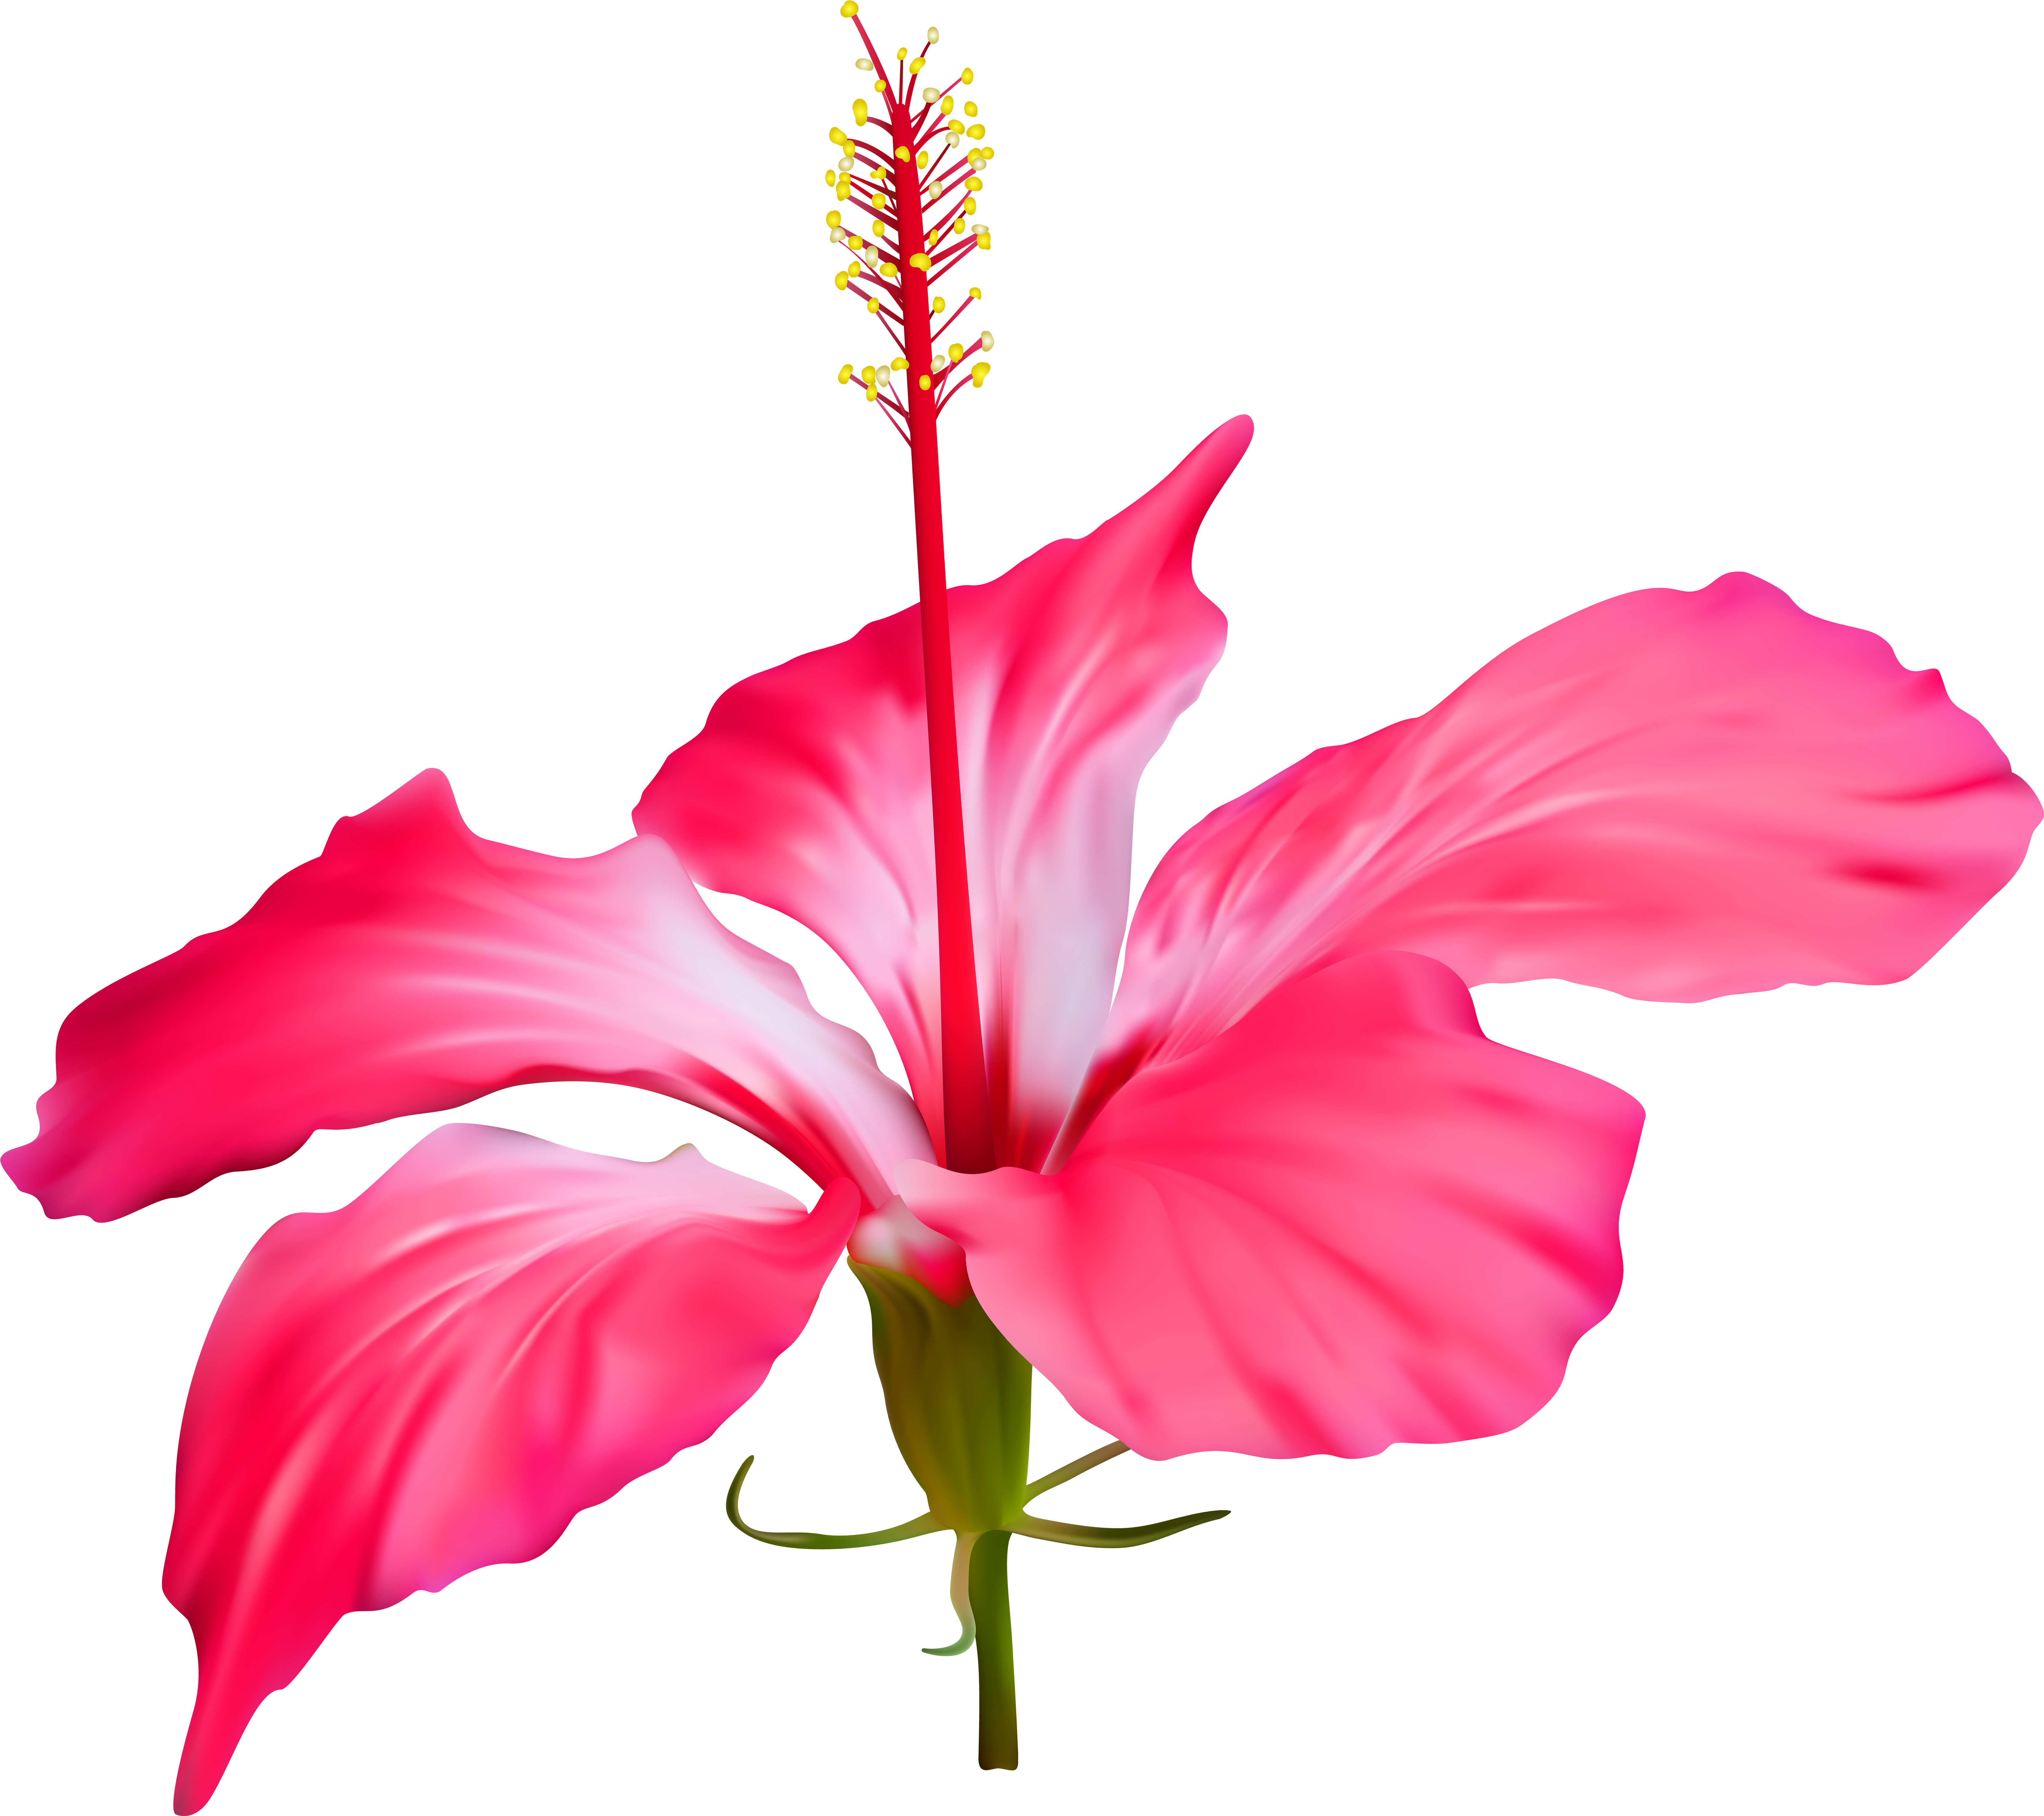 Shoeblackplant Floral Design Flower Petal Weighing - Hibiscus Flower Transparent Background (7000x6219)